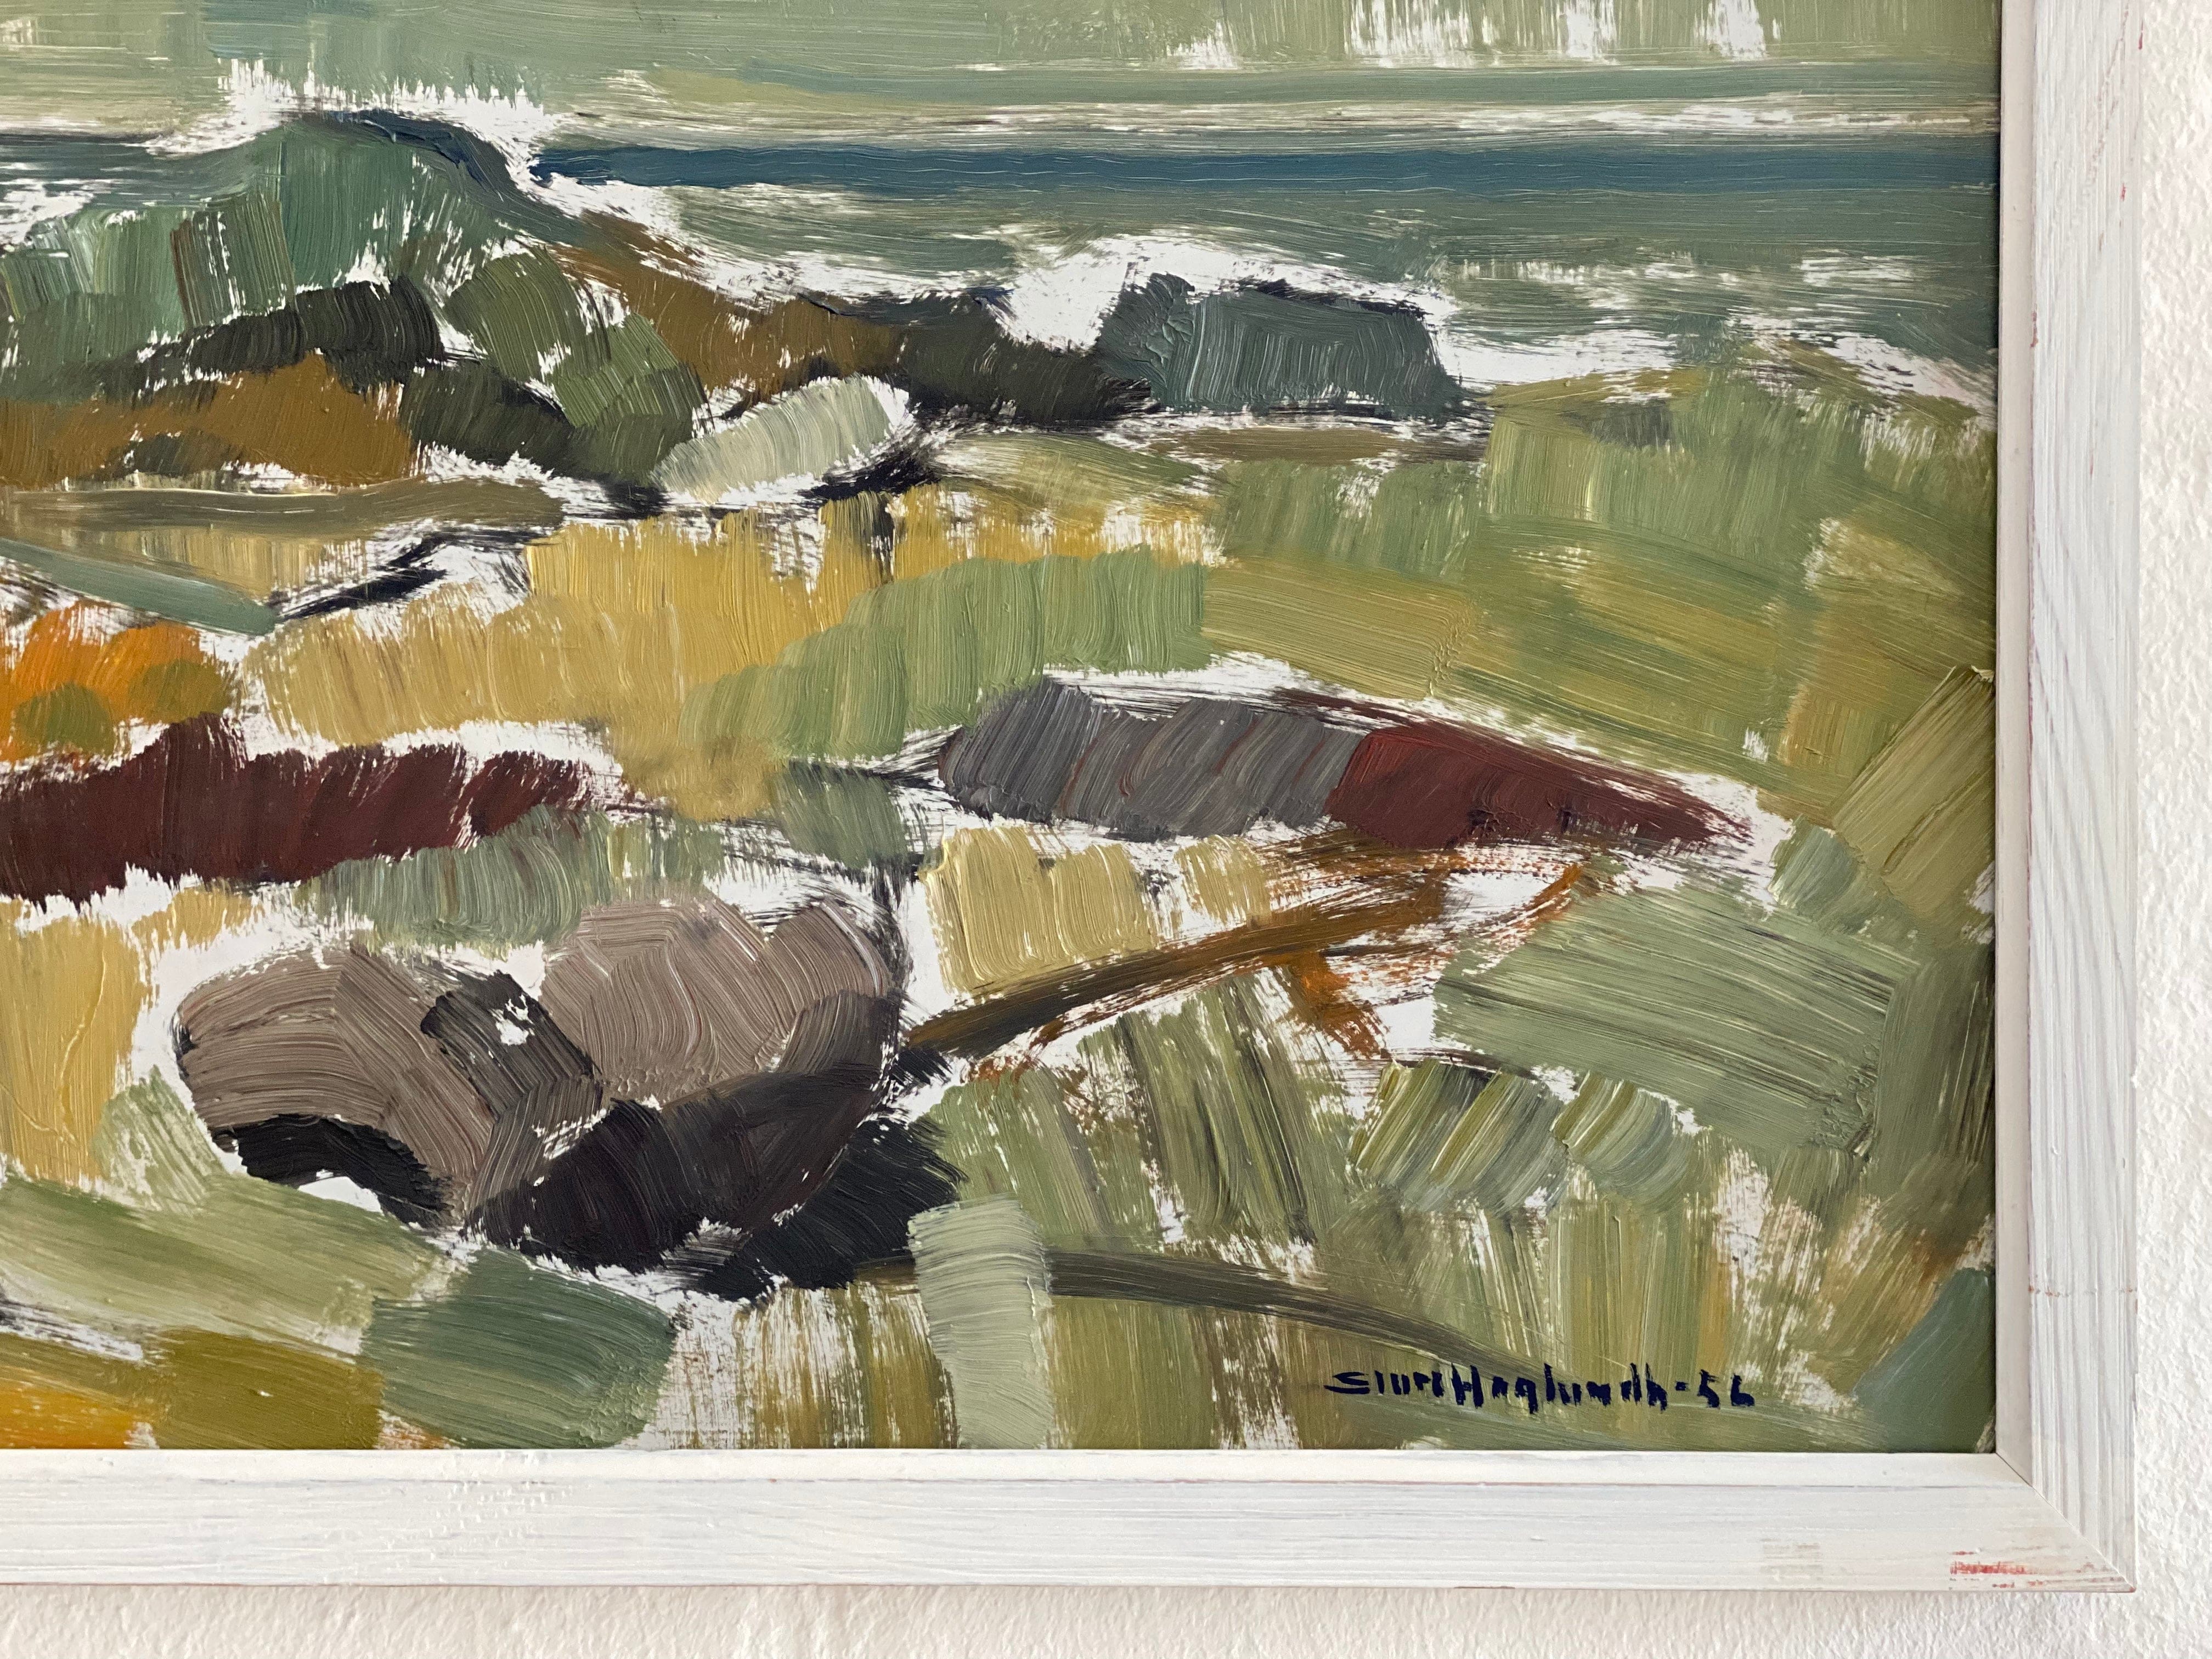 Kept London Stock *Long beach landscape by Sture Haglungh (1908-1978)